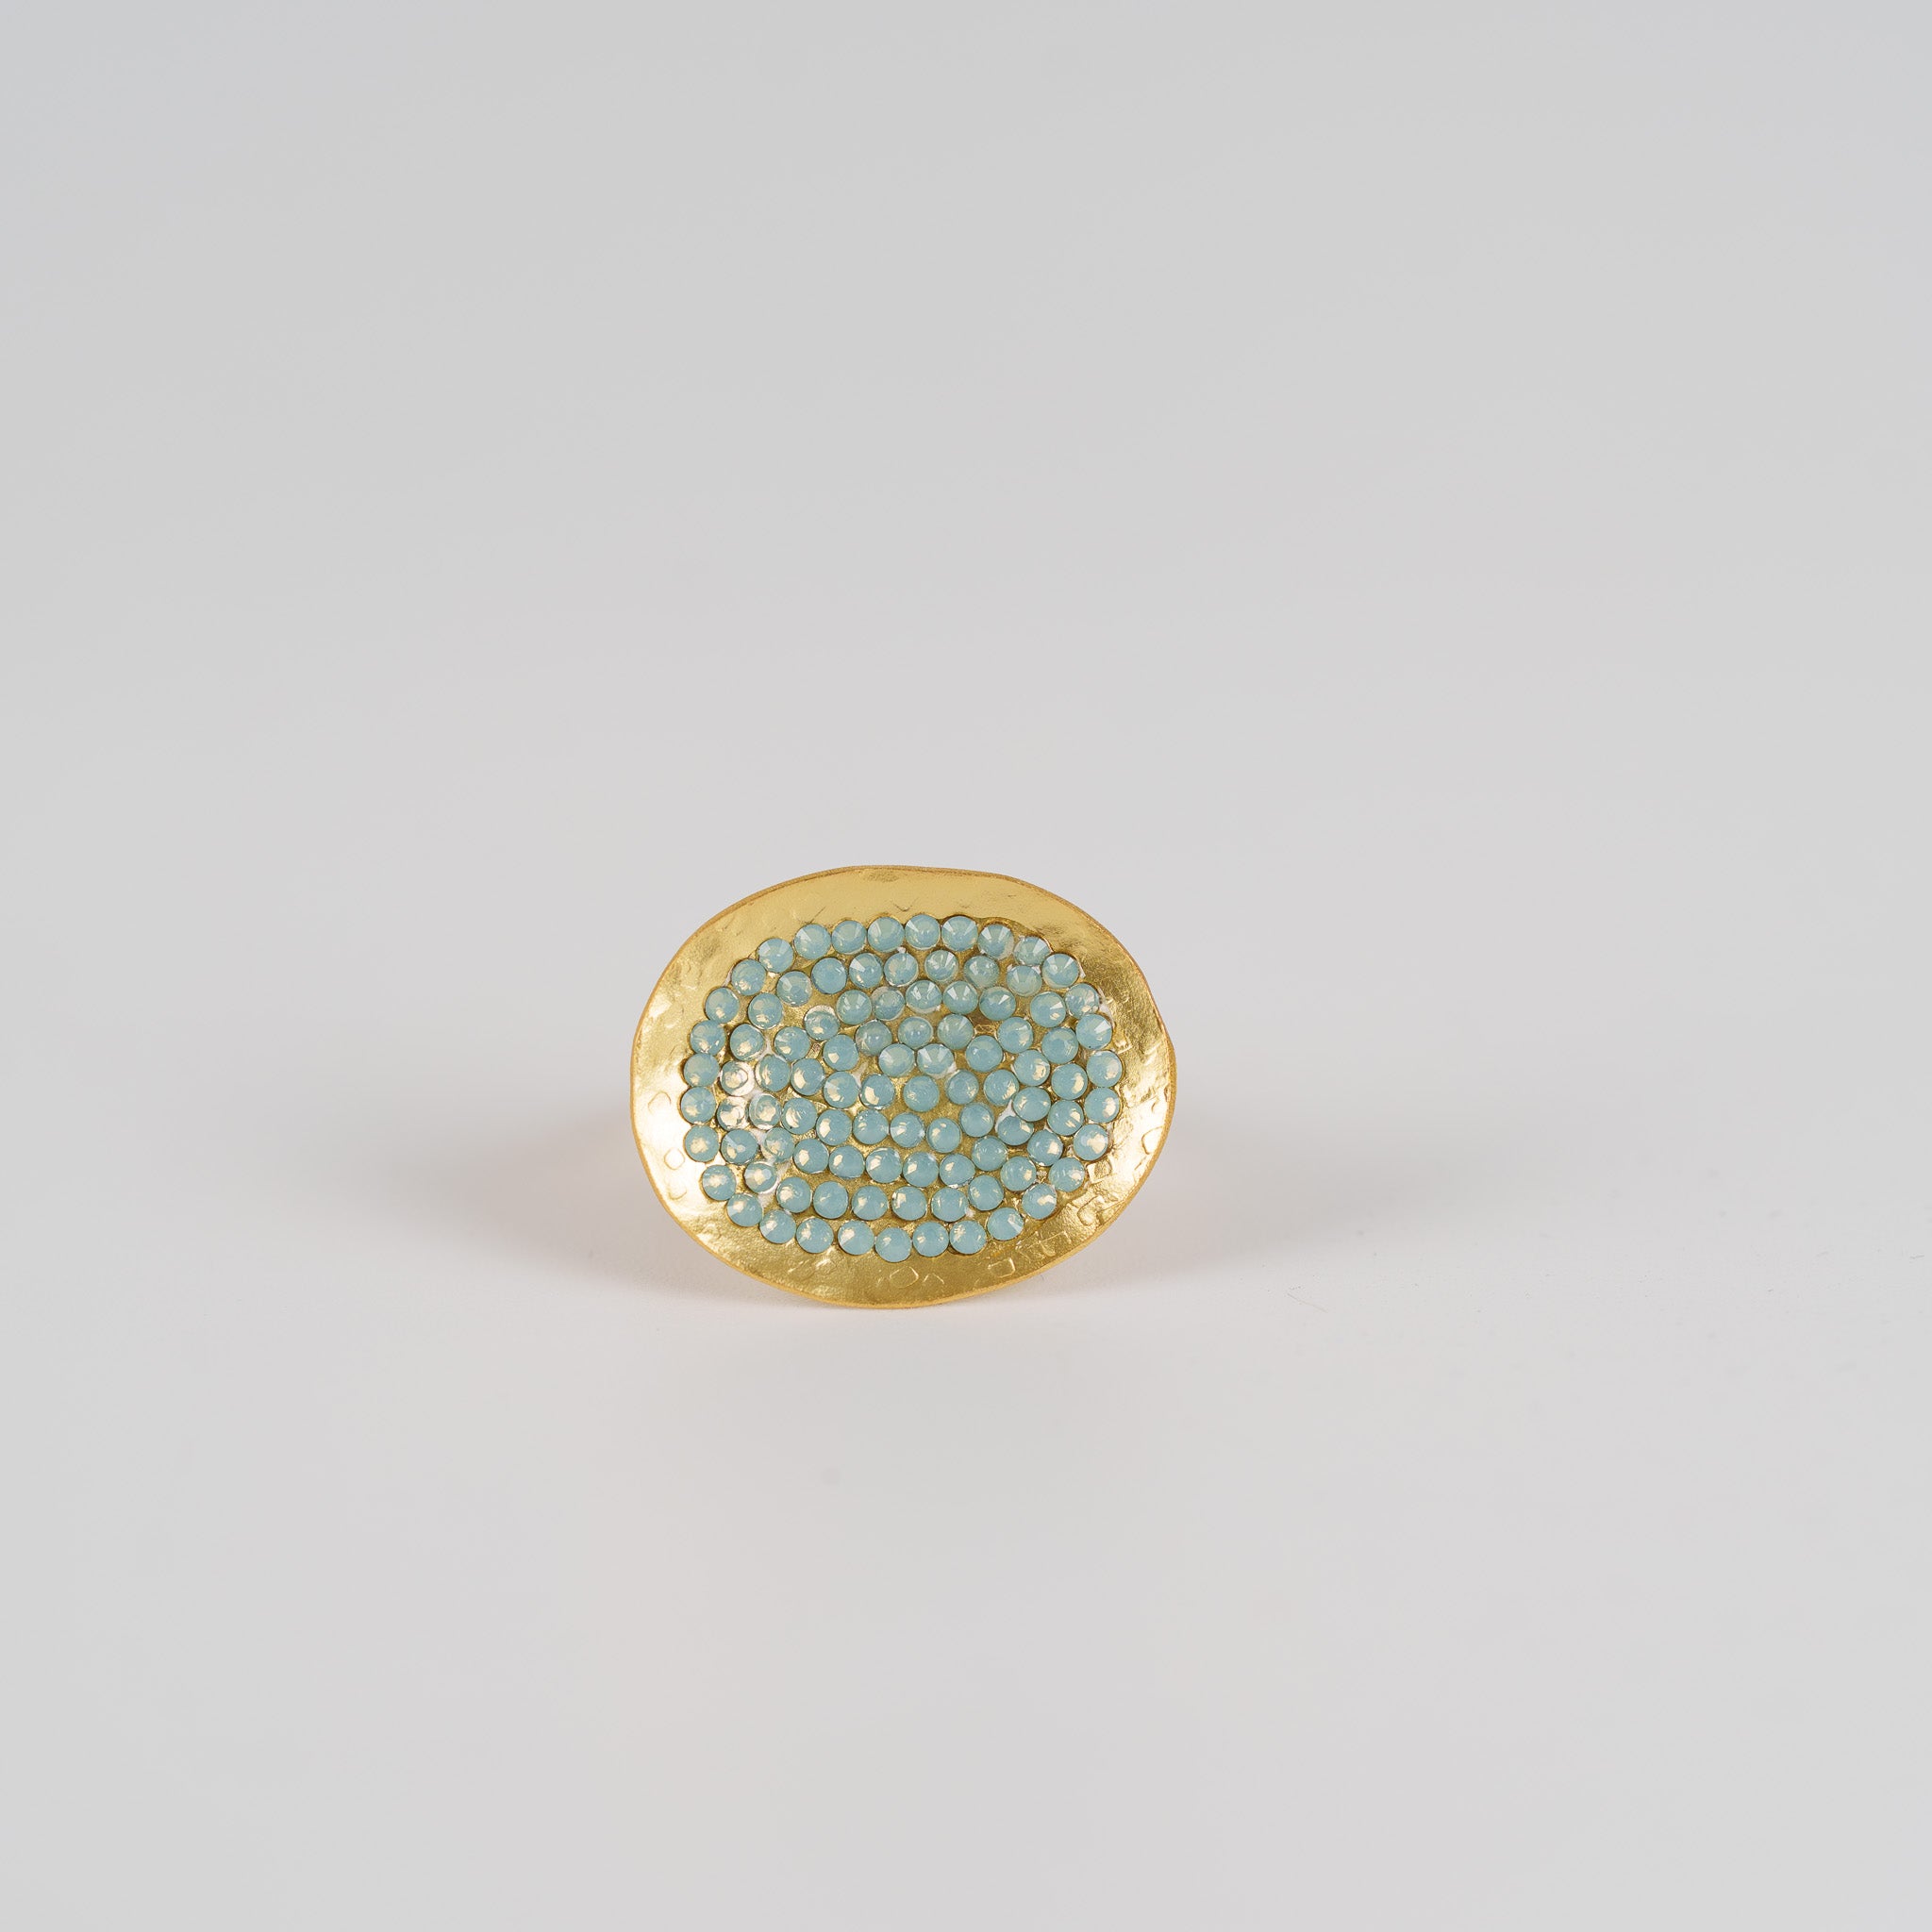 Bronze crystal oval ring- aqua